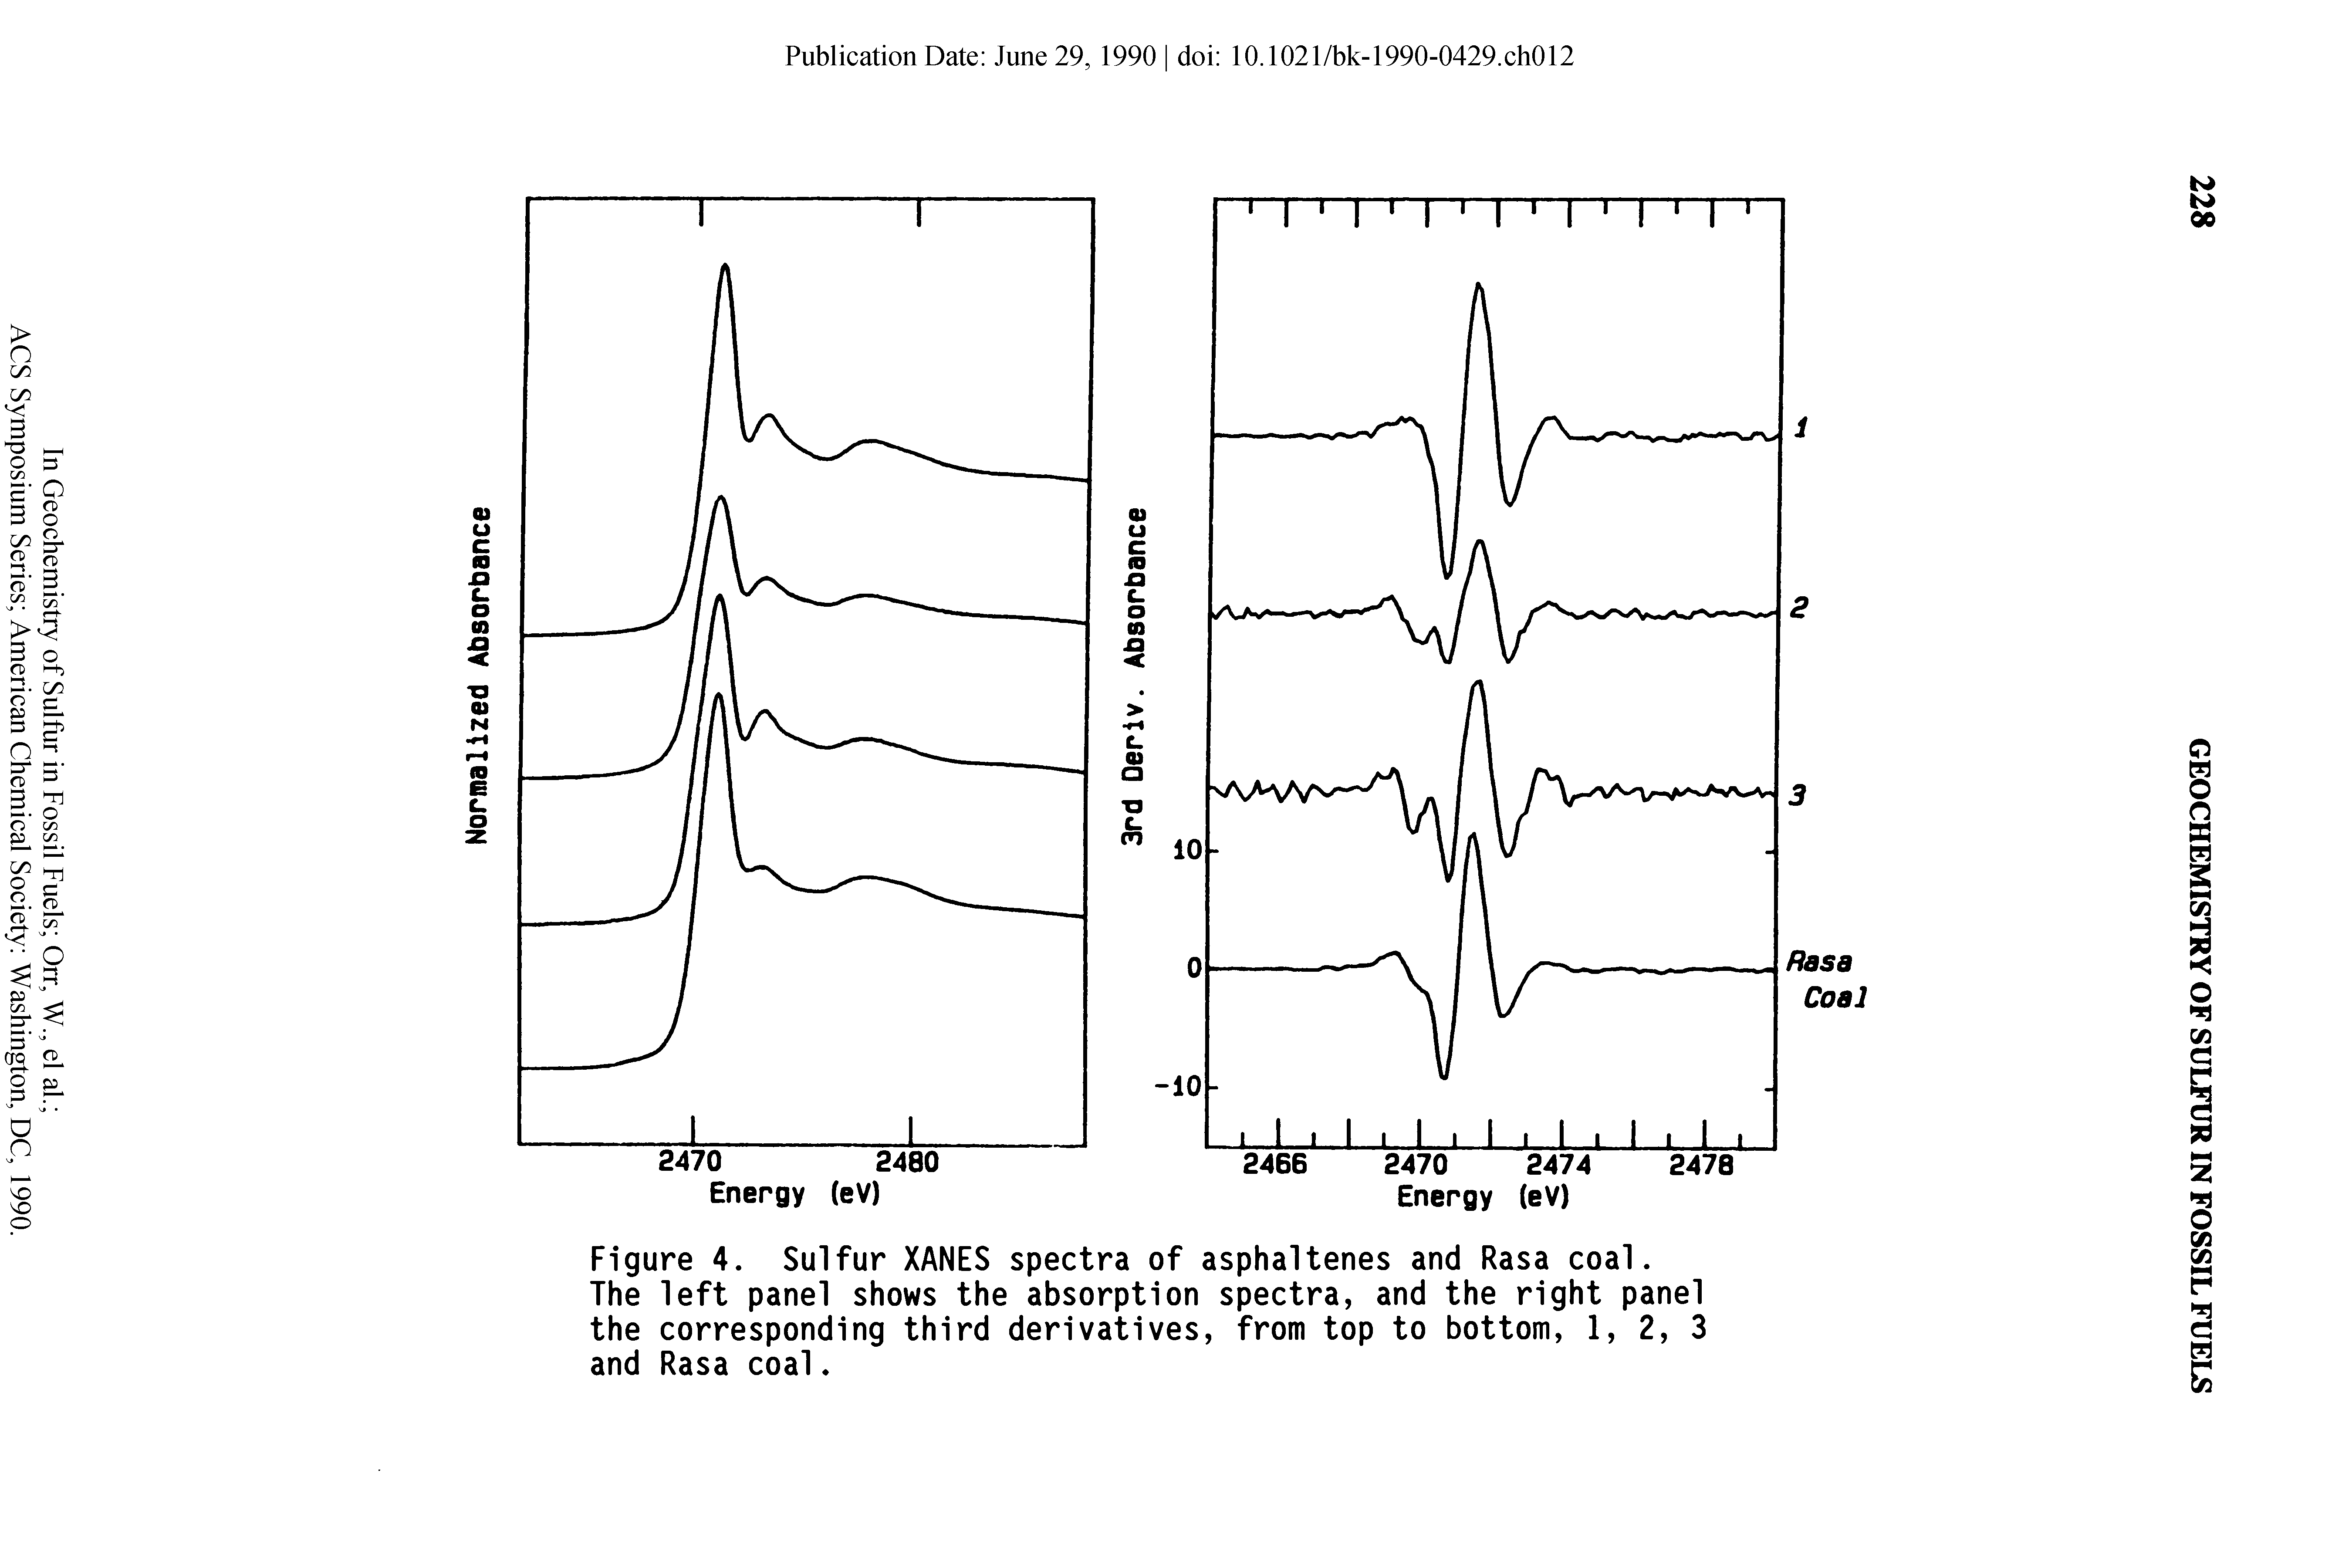 Figure 4. Sulfur XANES spectra of asphaltenes and Rasa coal.